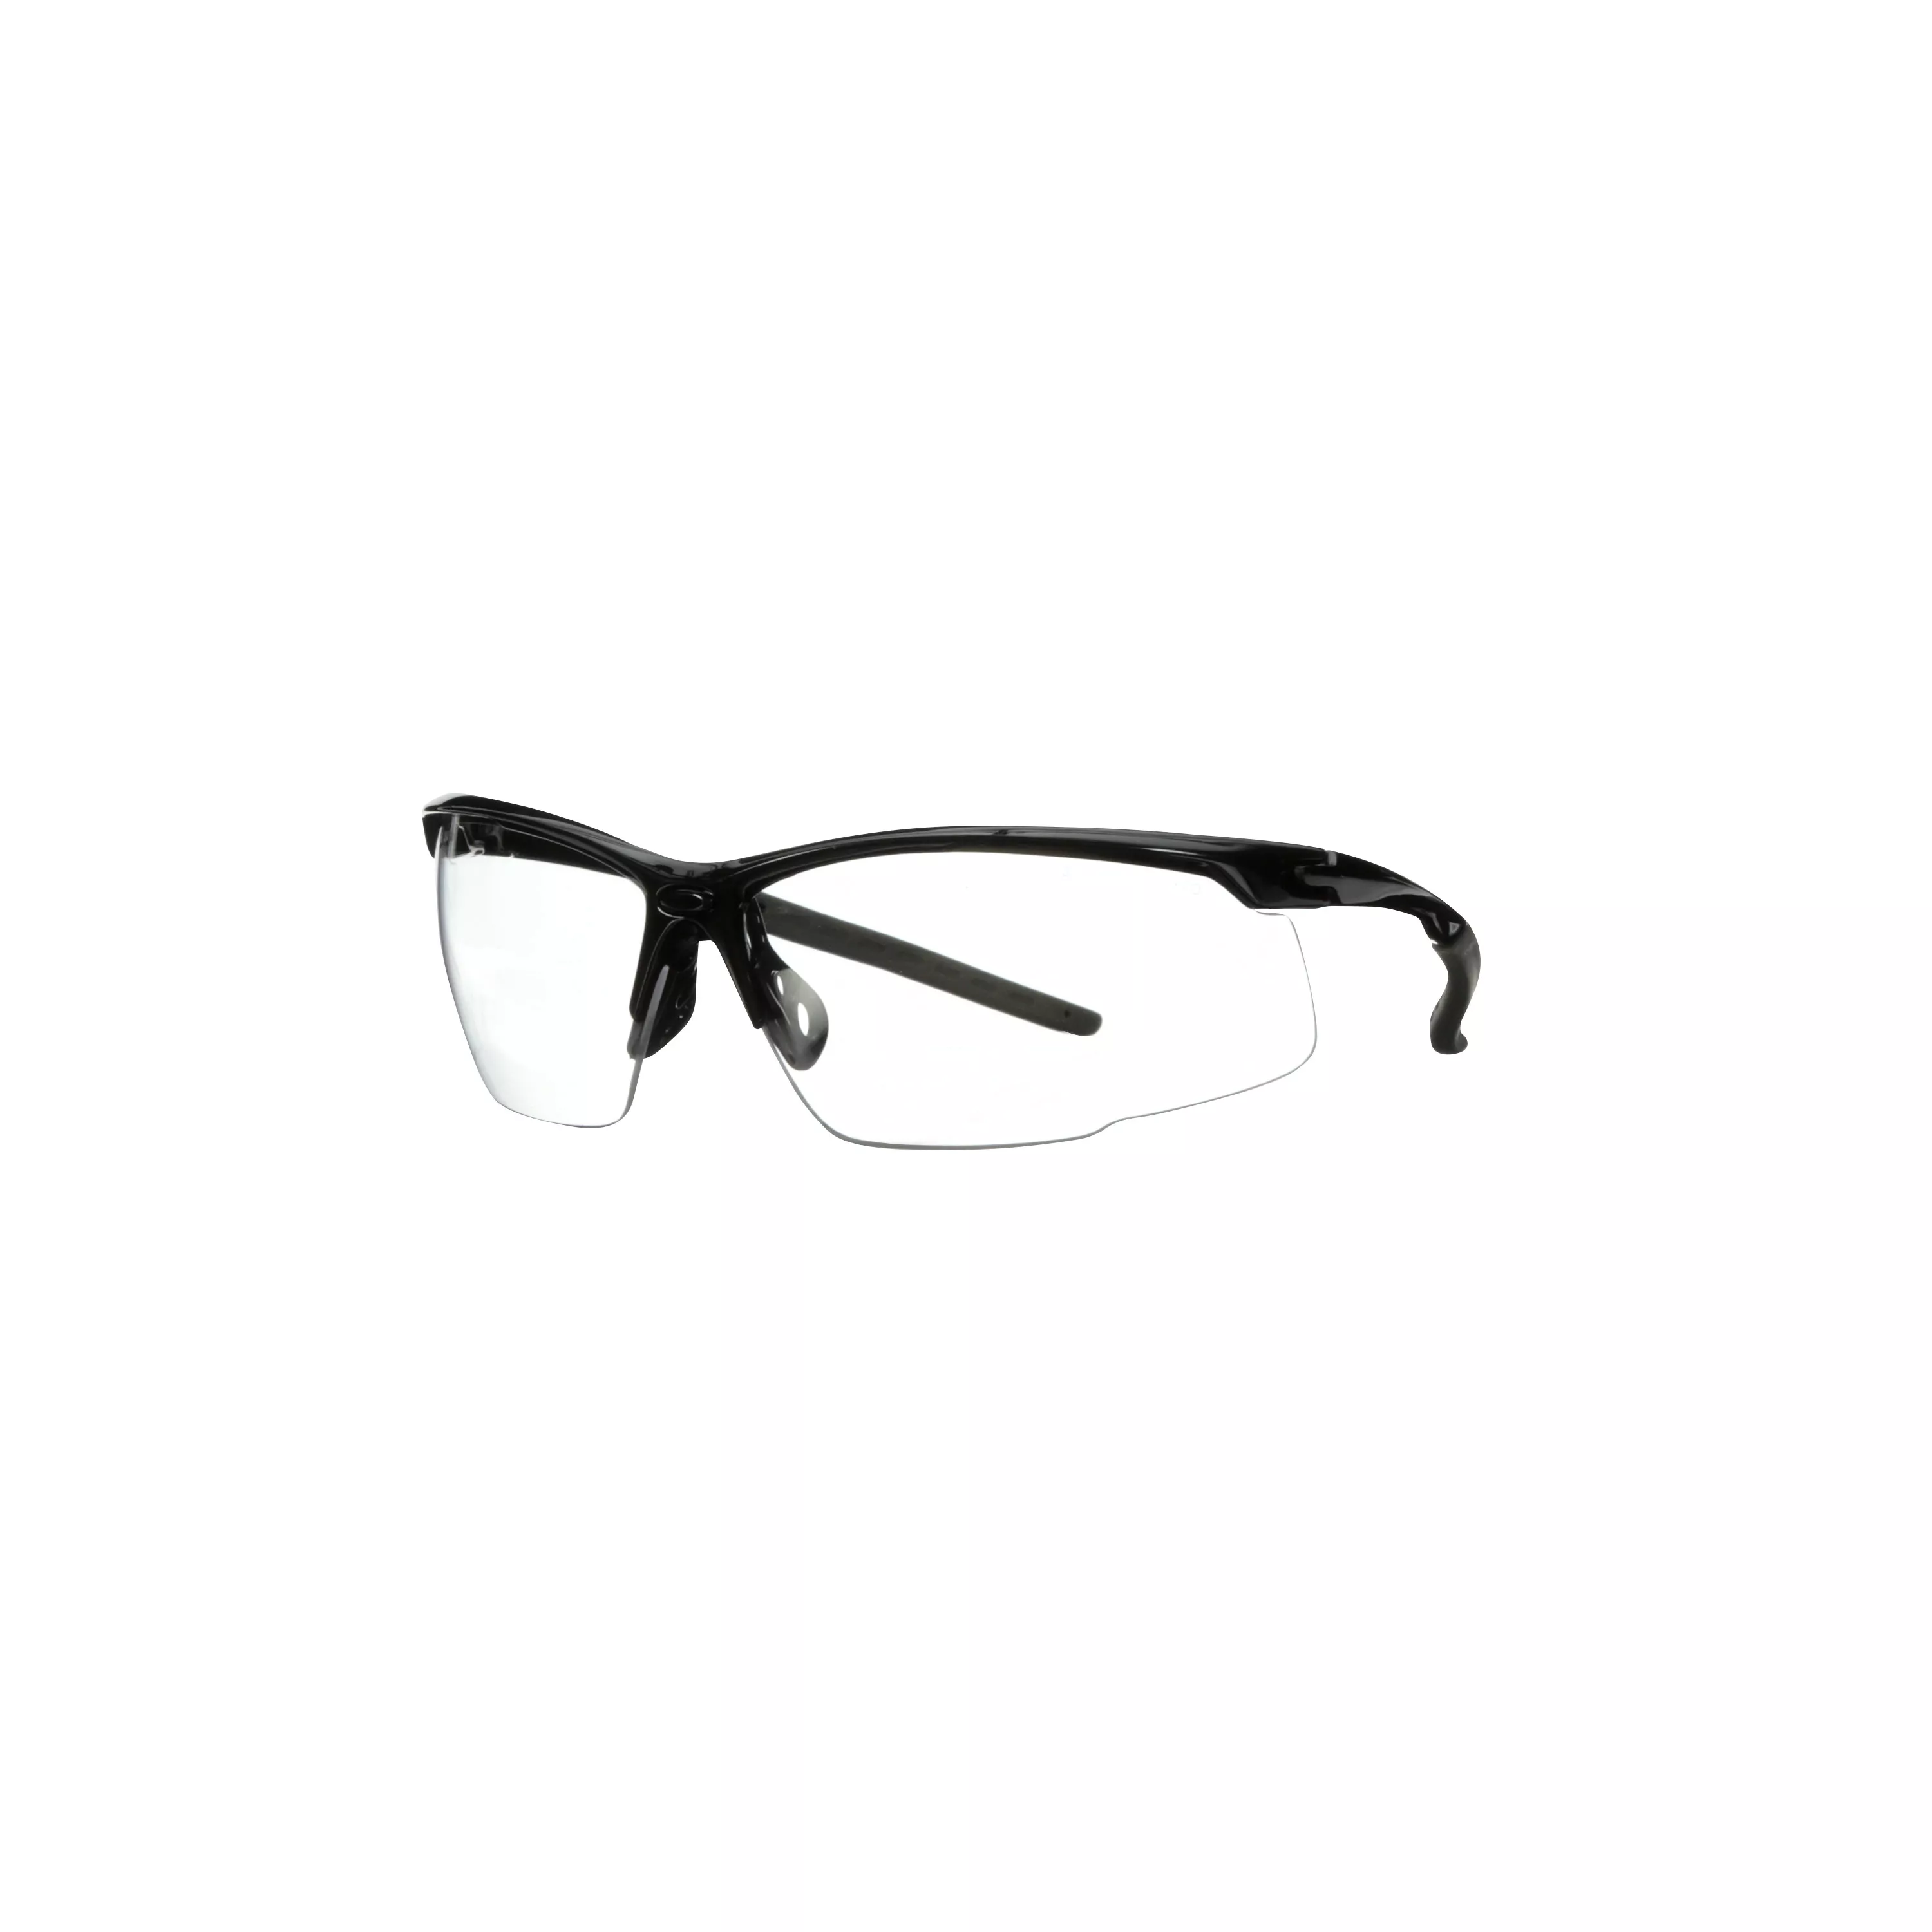 Product Number 47070H1-DC | 3M™ Performance Eyewear 47070H1-DC Black/Gray